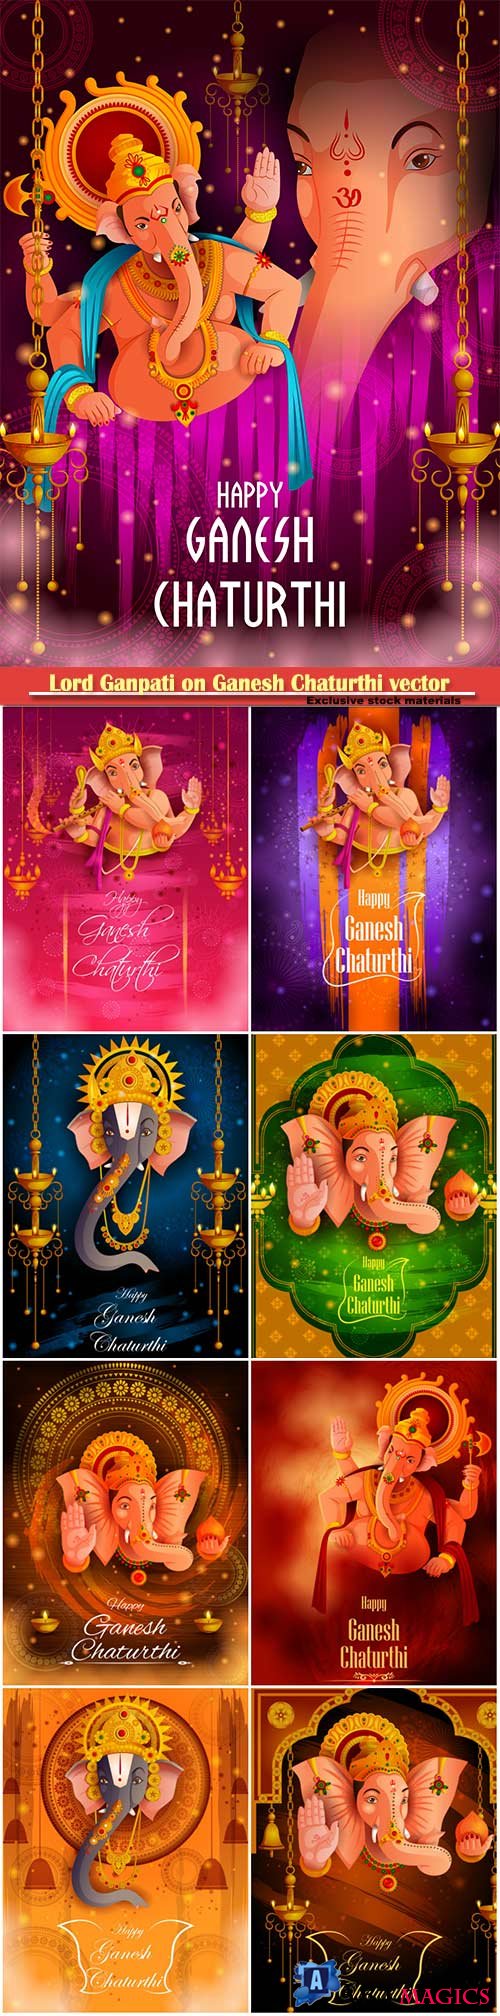 Lord Ganpati on Ganesh Chaturthi vector background